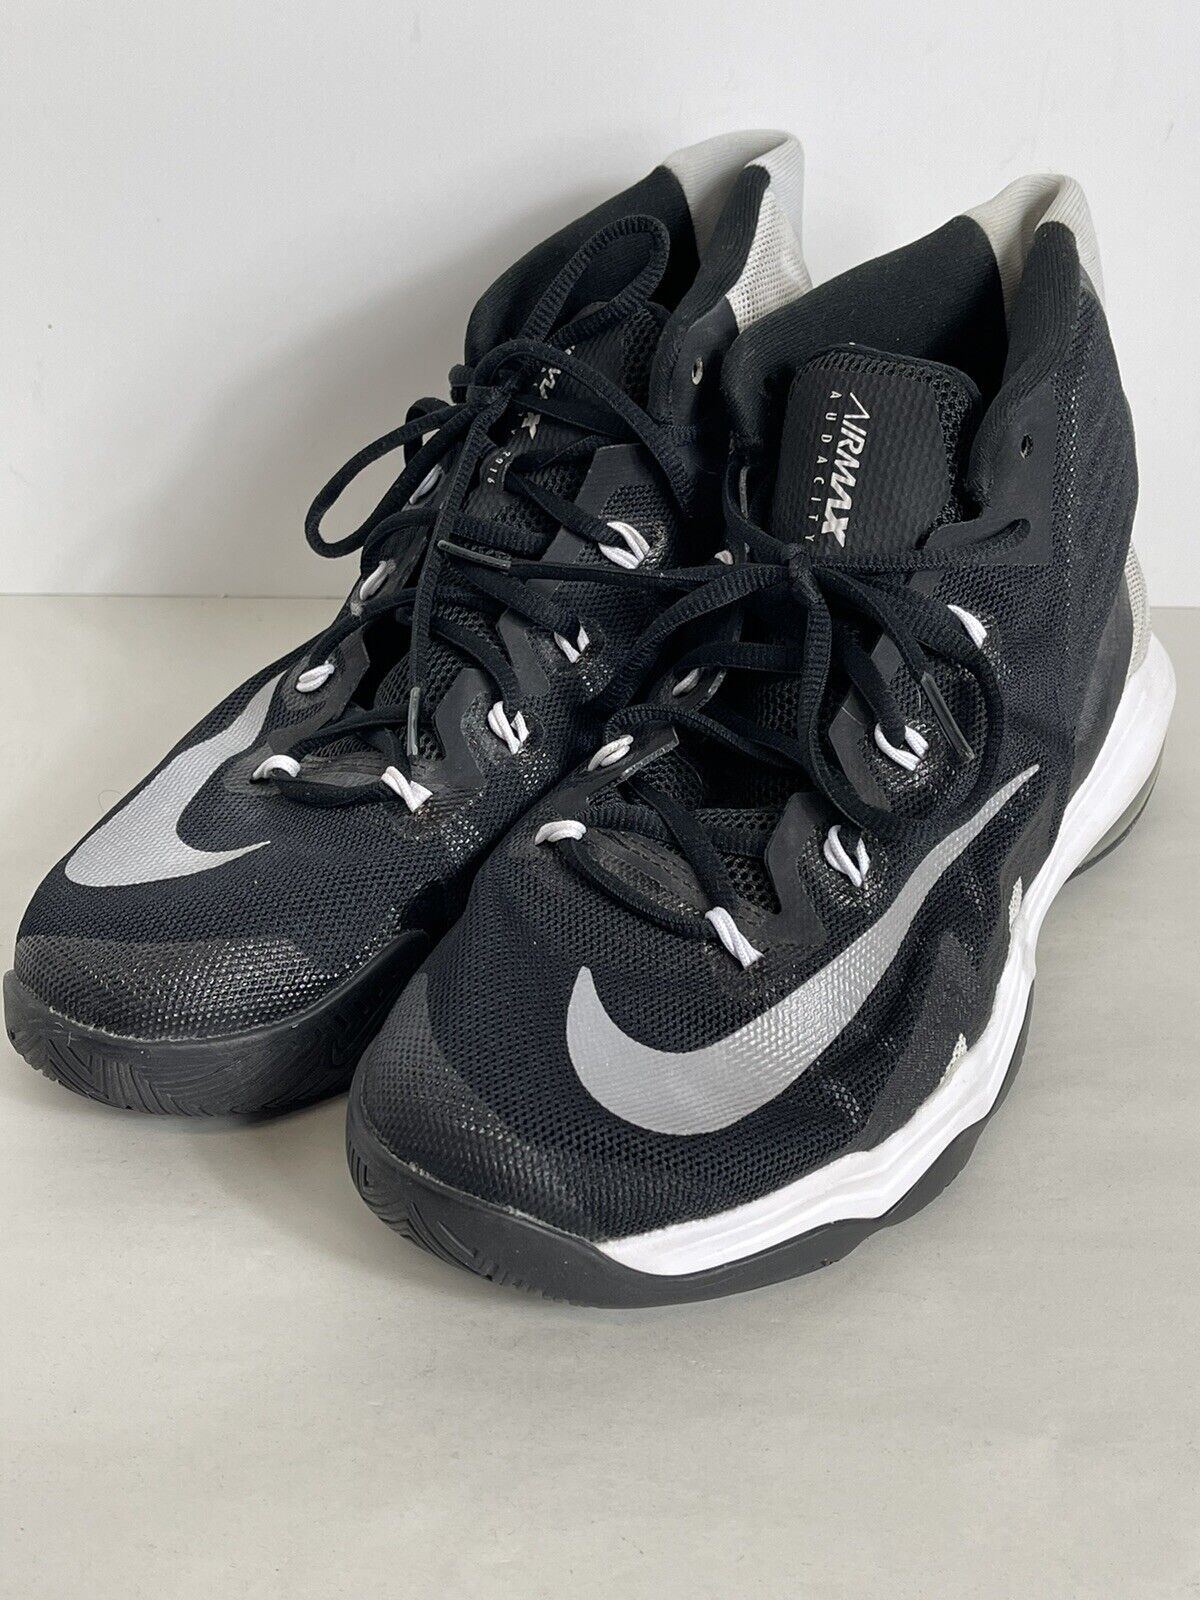 Air Max Audacity Men's 10 Black White 843884-001 Basketball Shoes | eBay